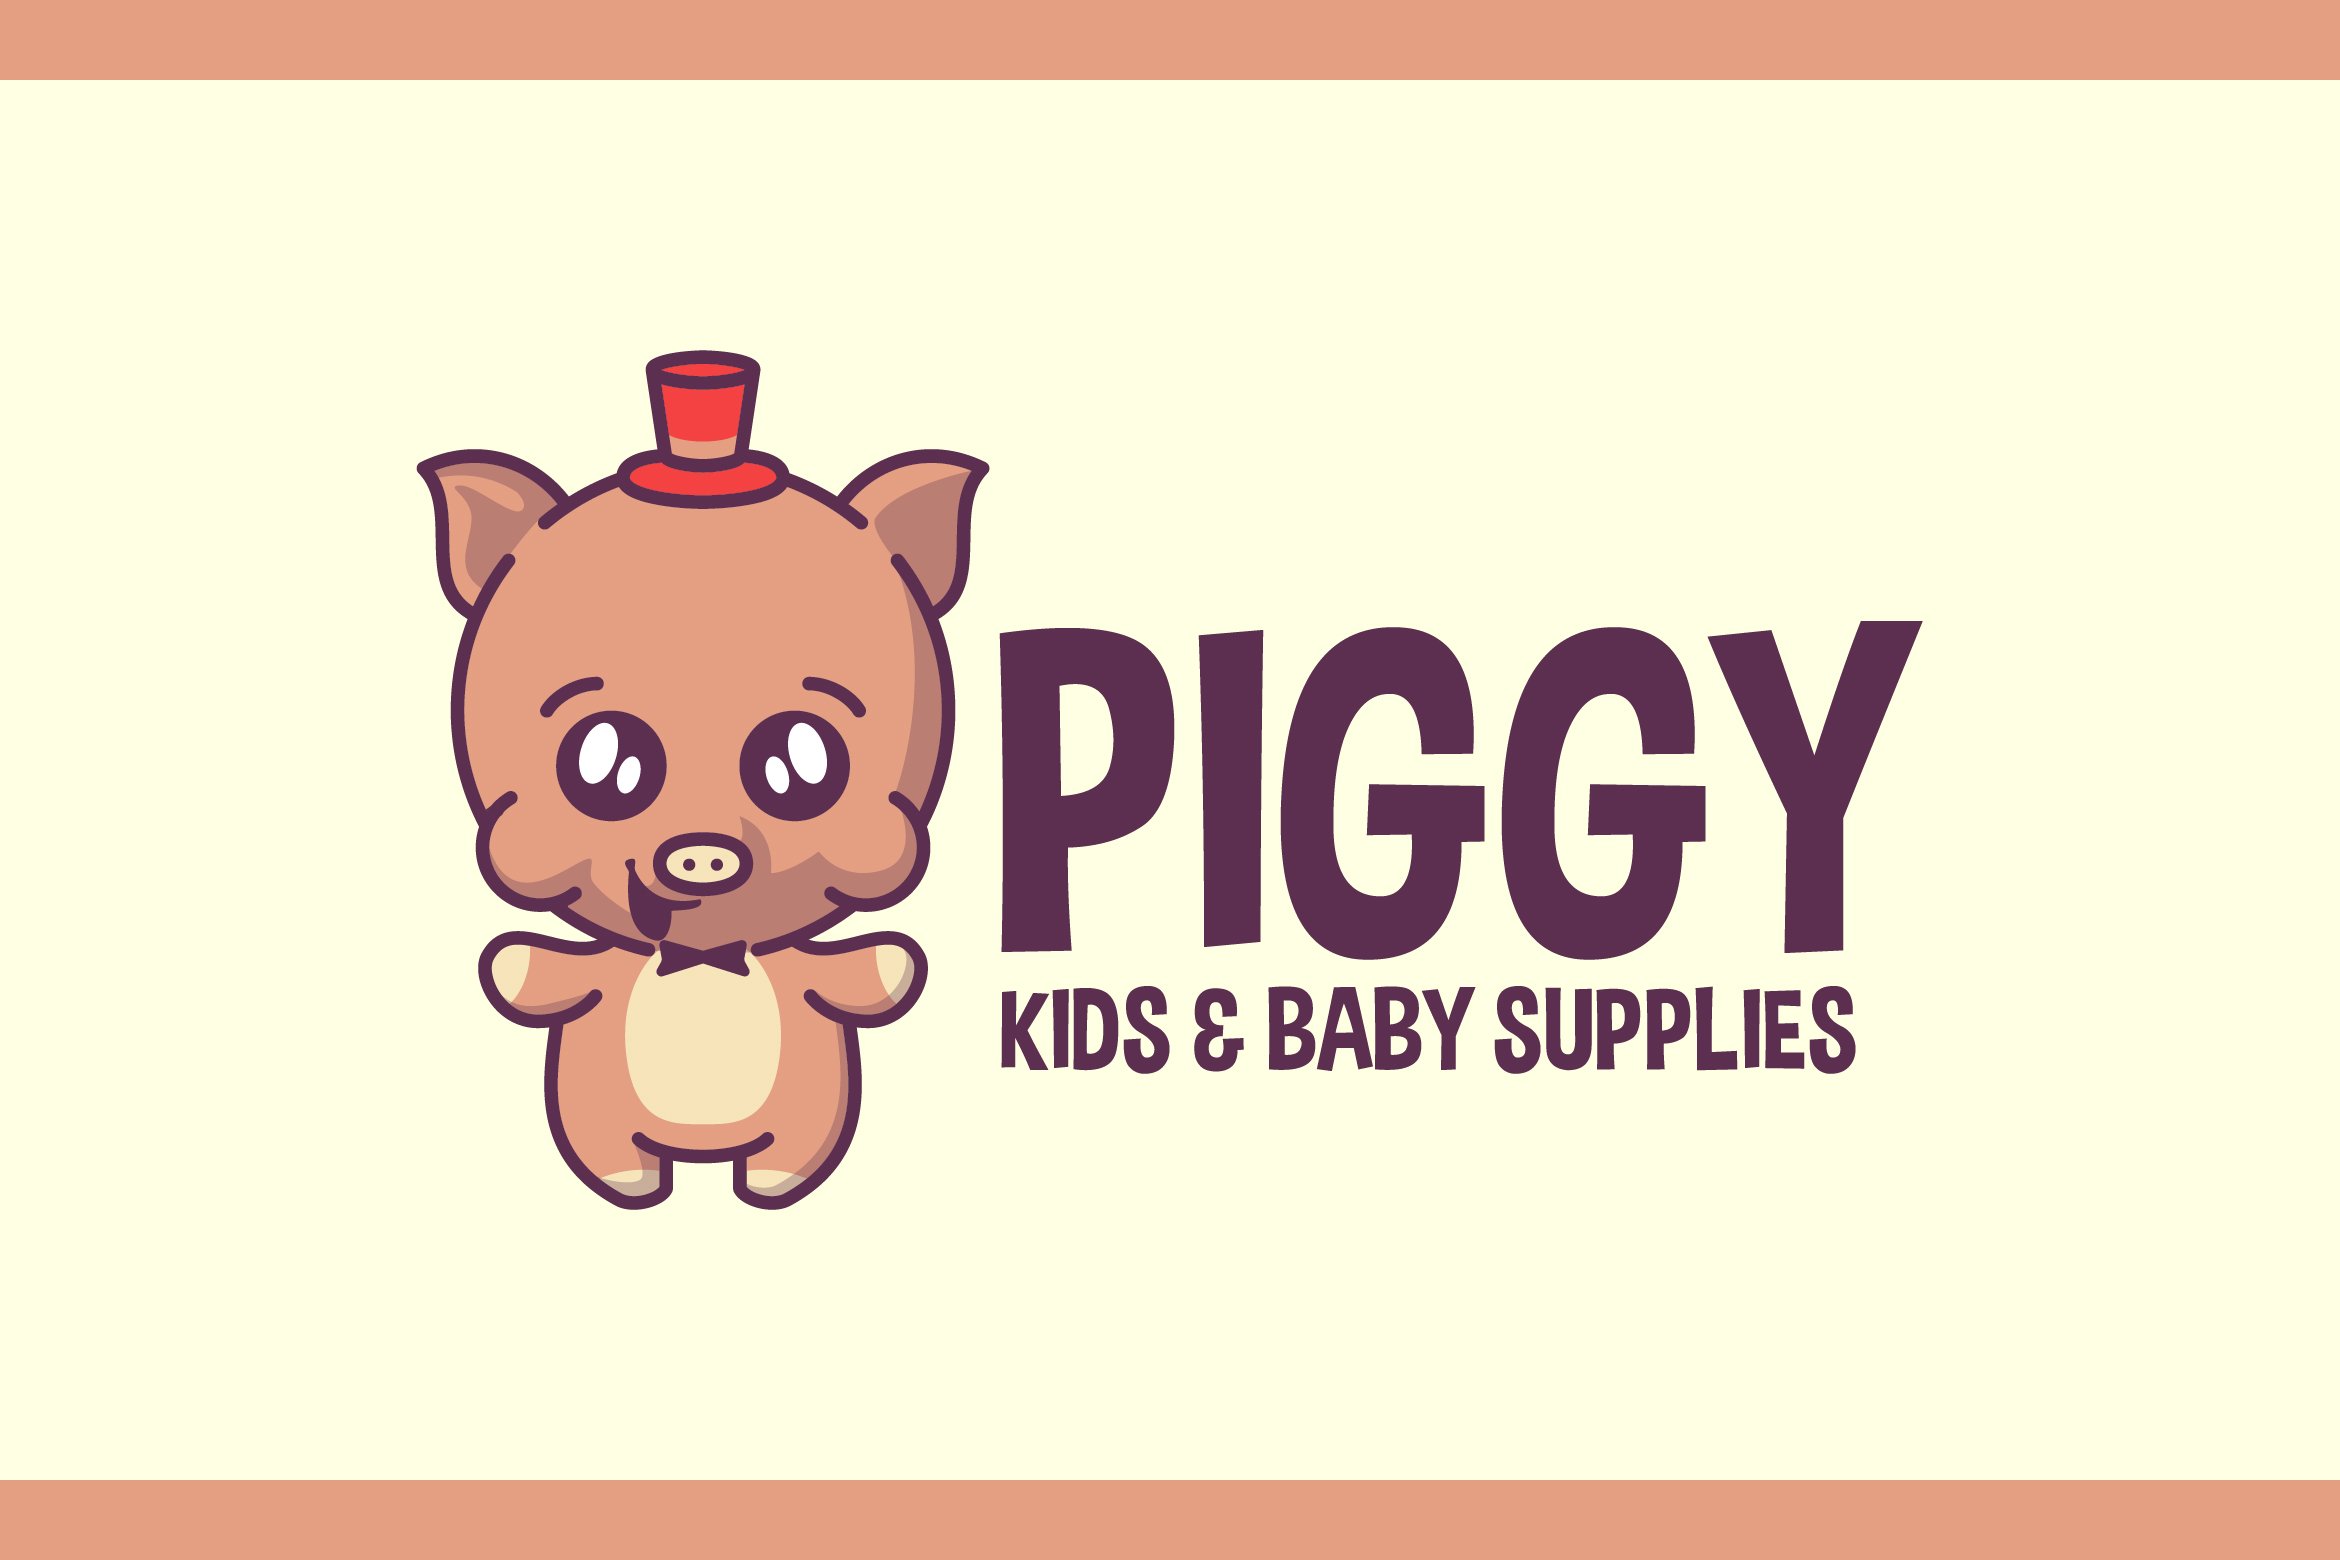 Piggy Hat Supplies Logo cover image.